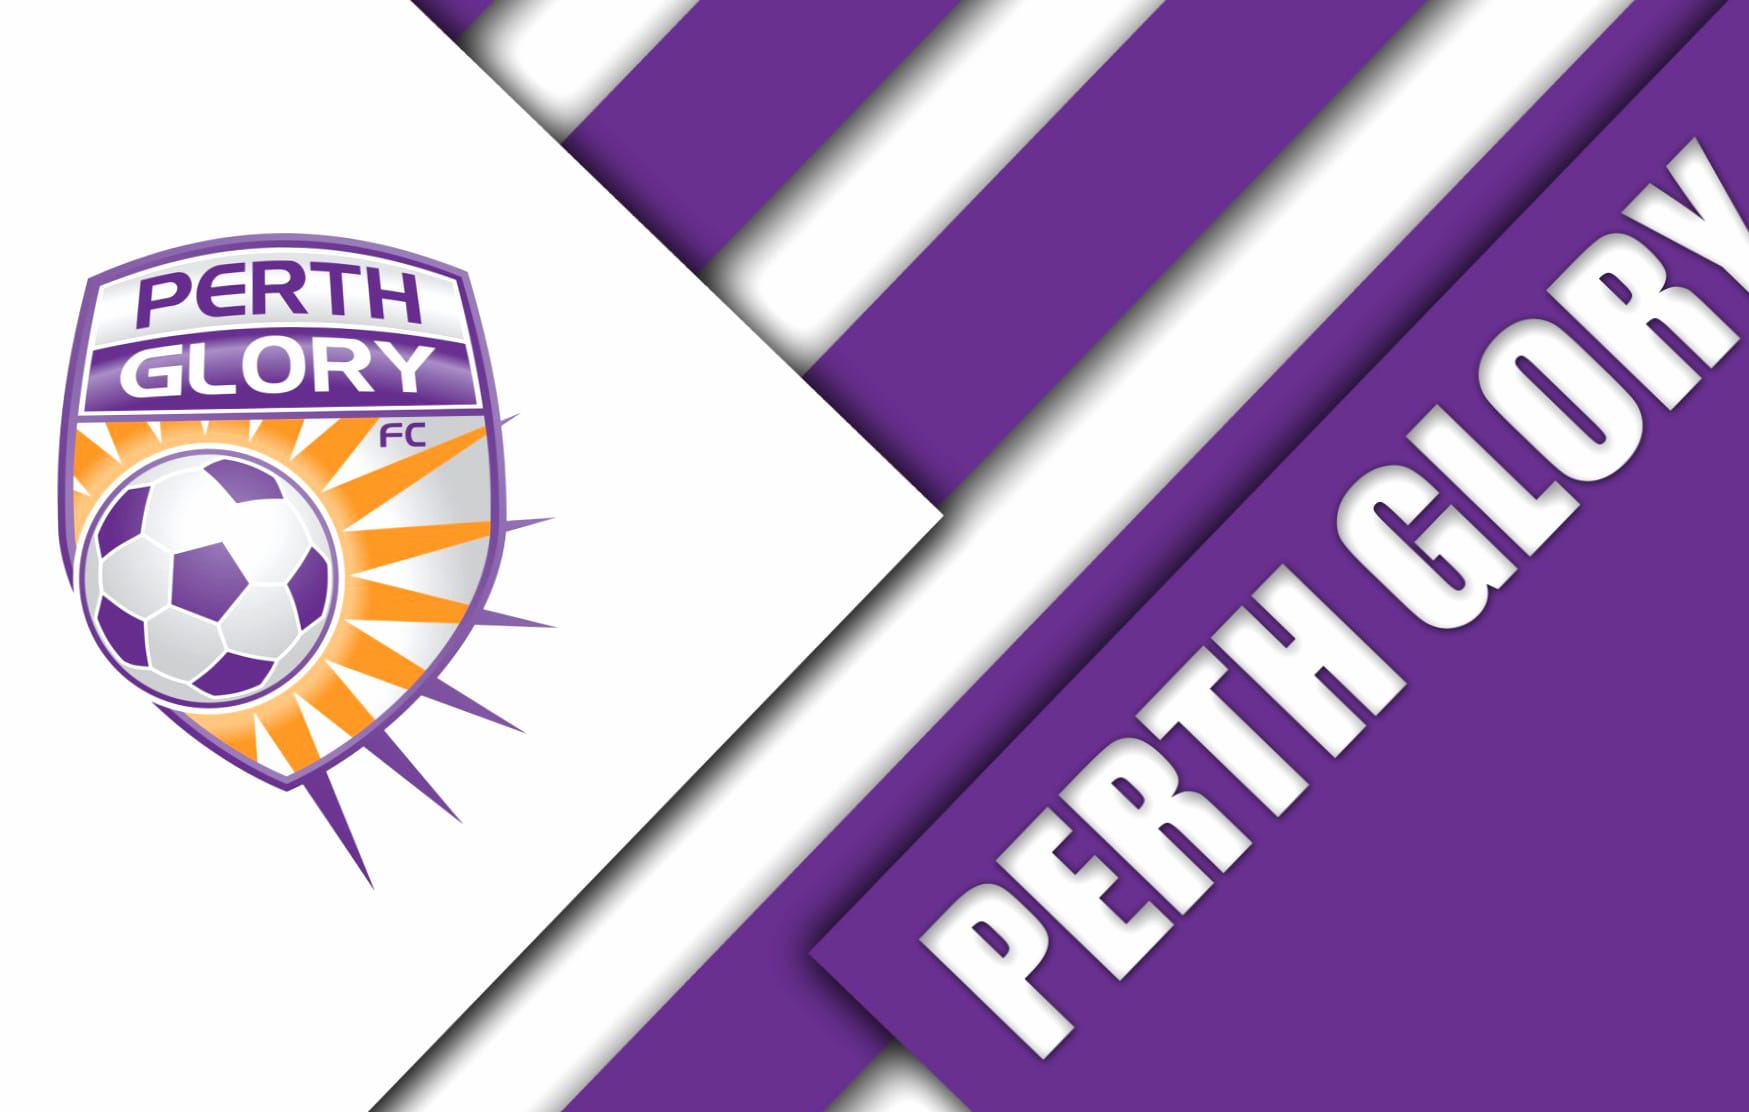 Perth Glory FC at 2048 x 2048 iPad size wallpapers HD quality